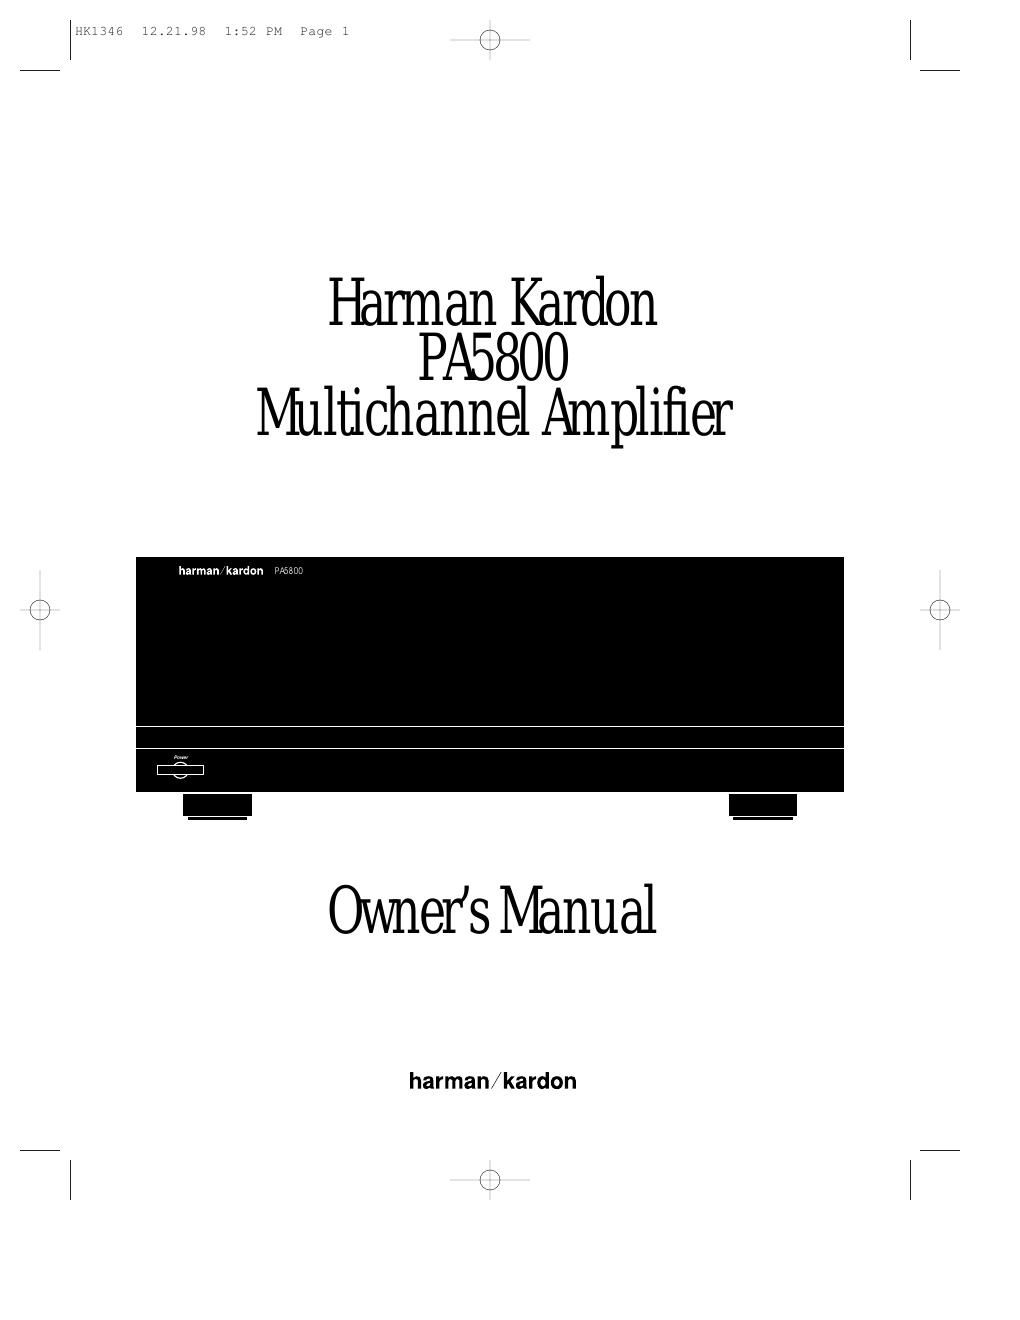 harman kardon pa 5800 owners manual